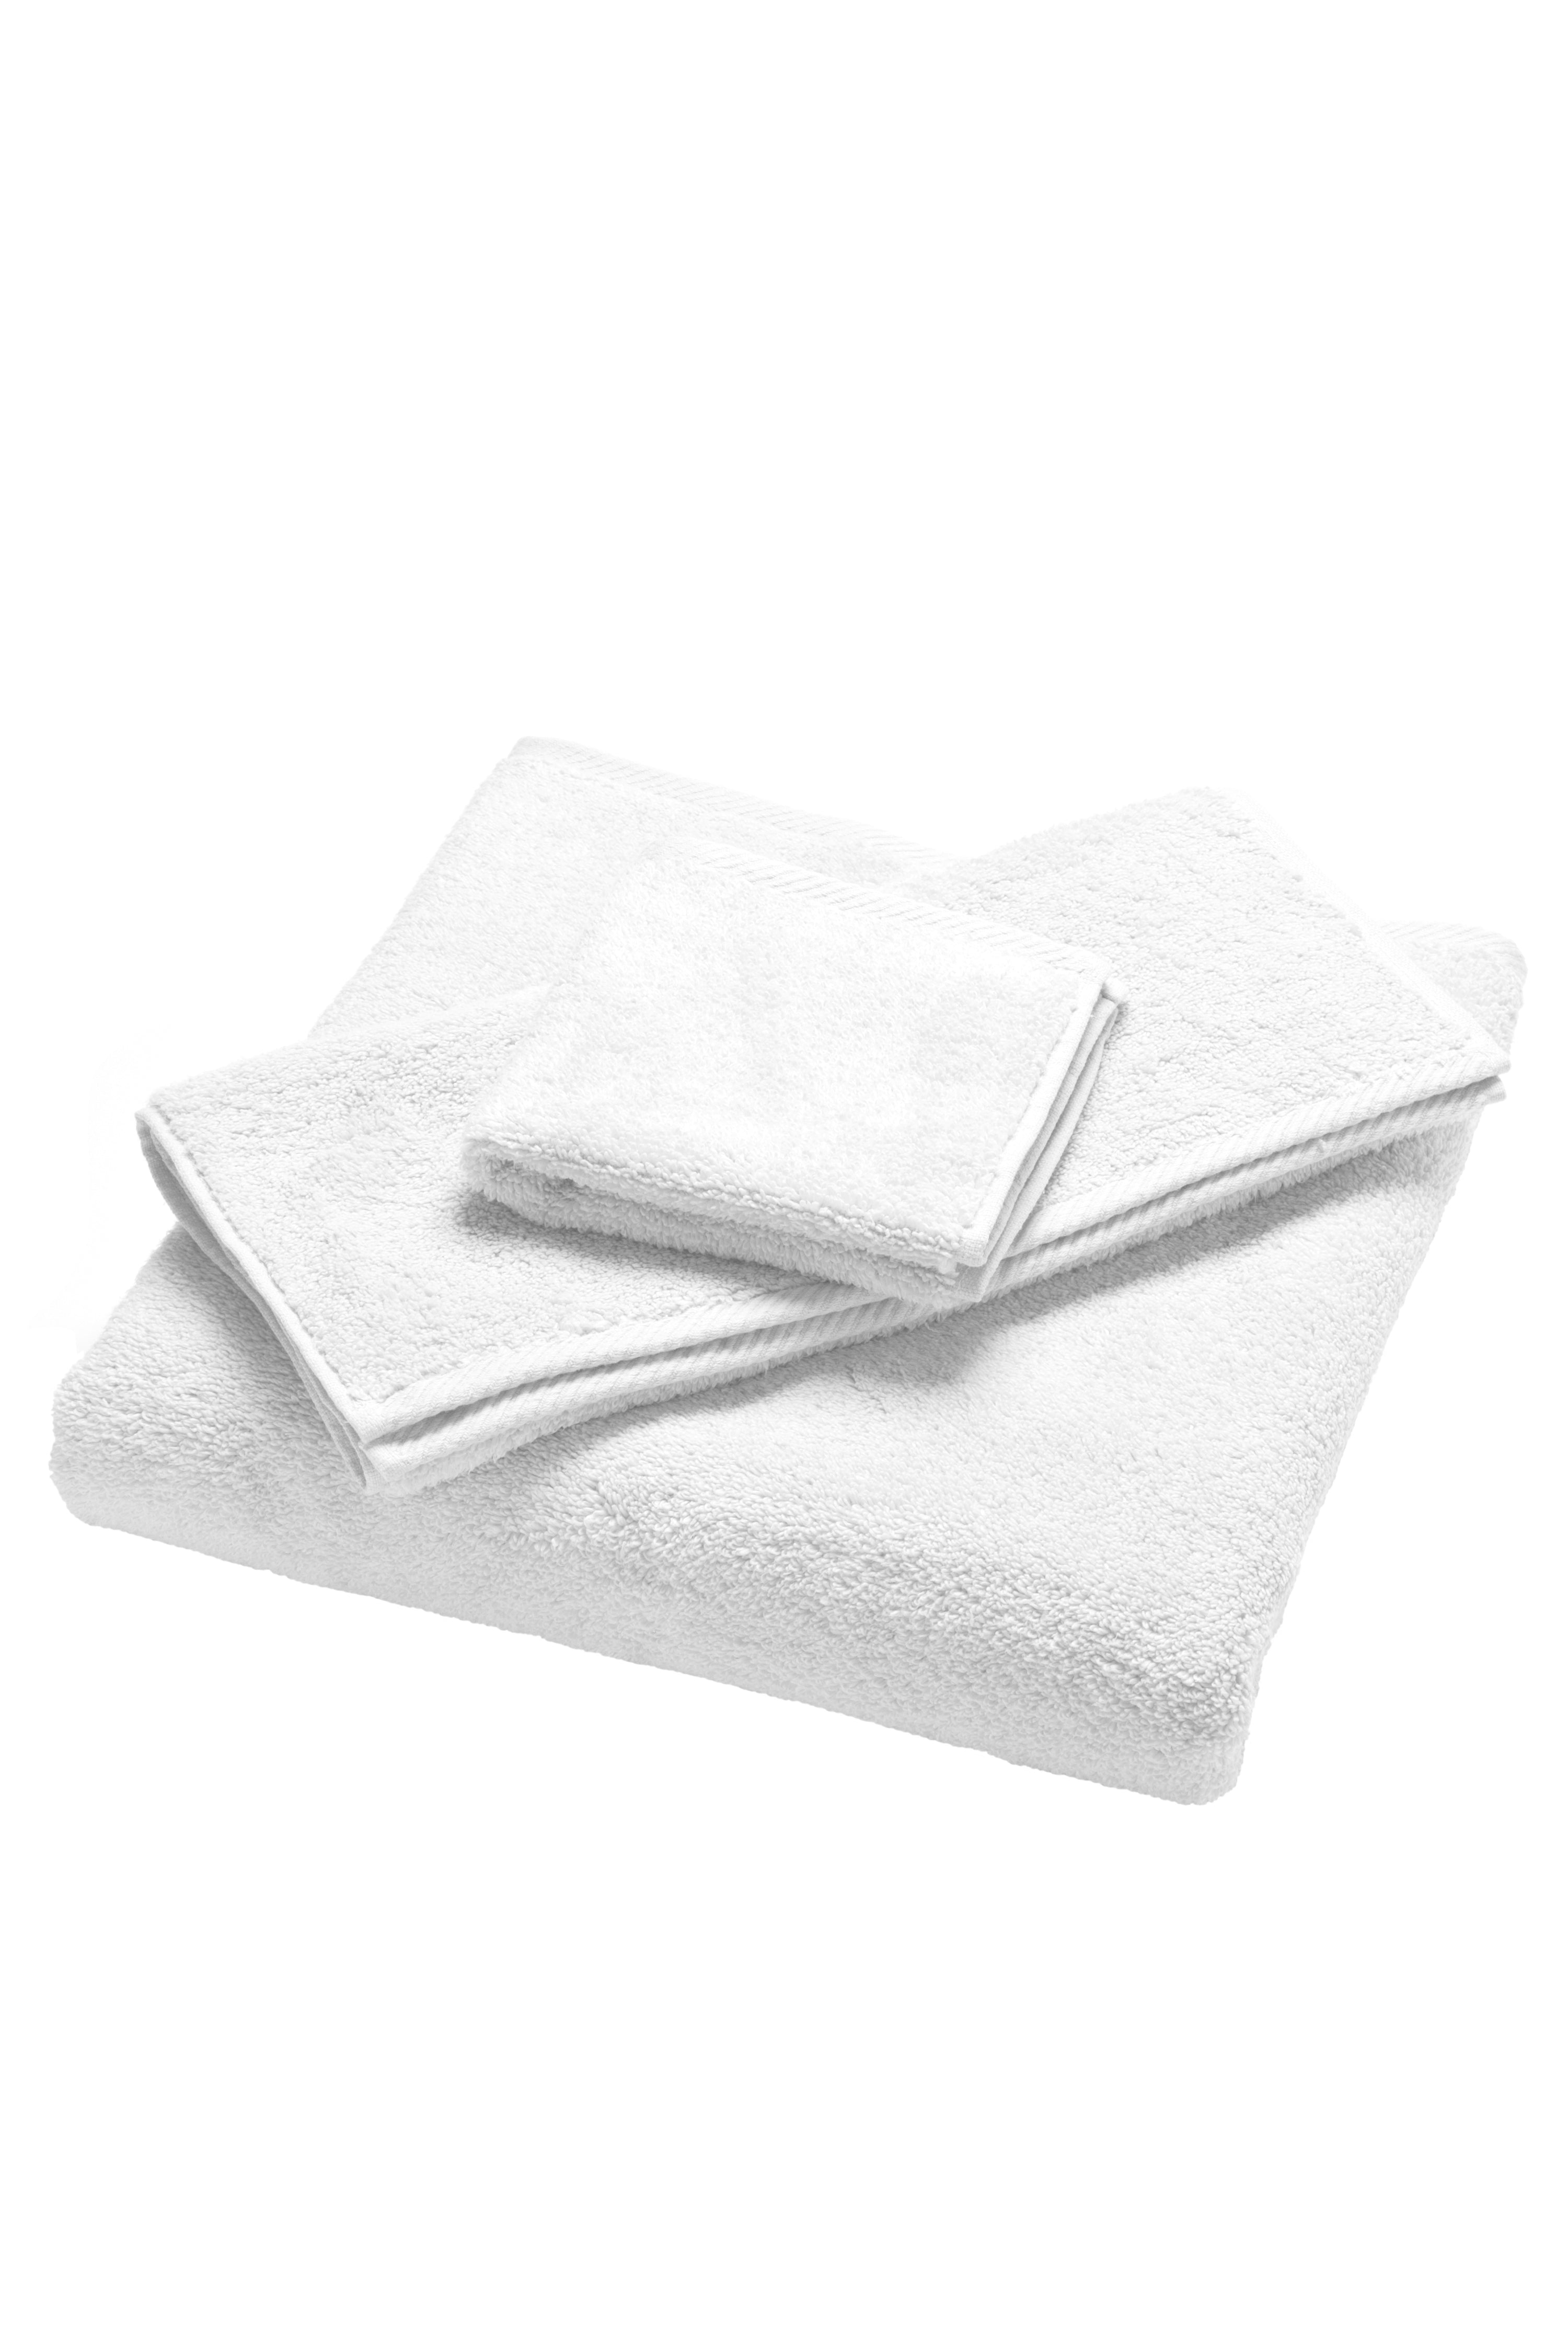 caro home new hotel vendome towel